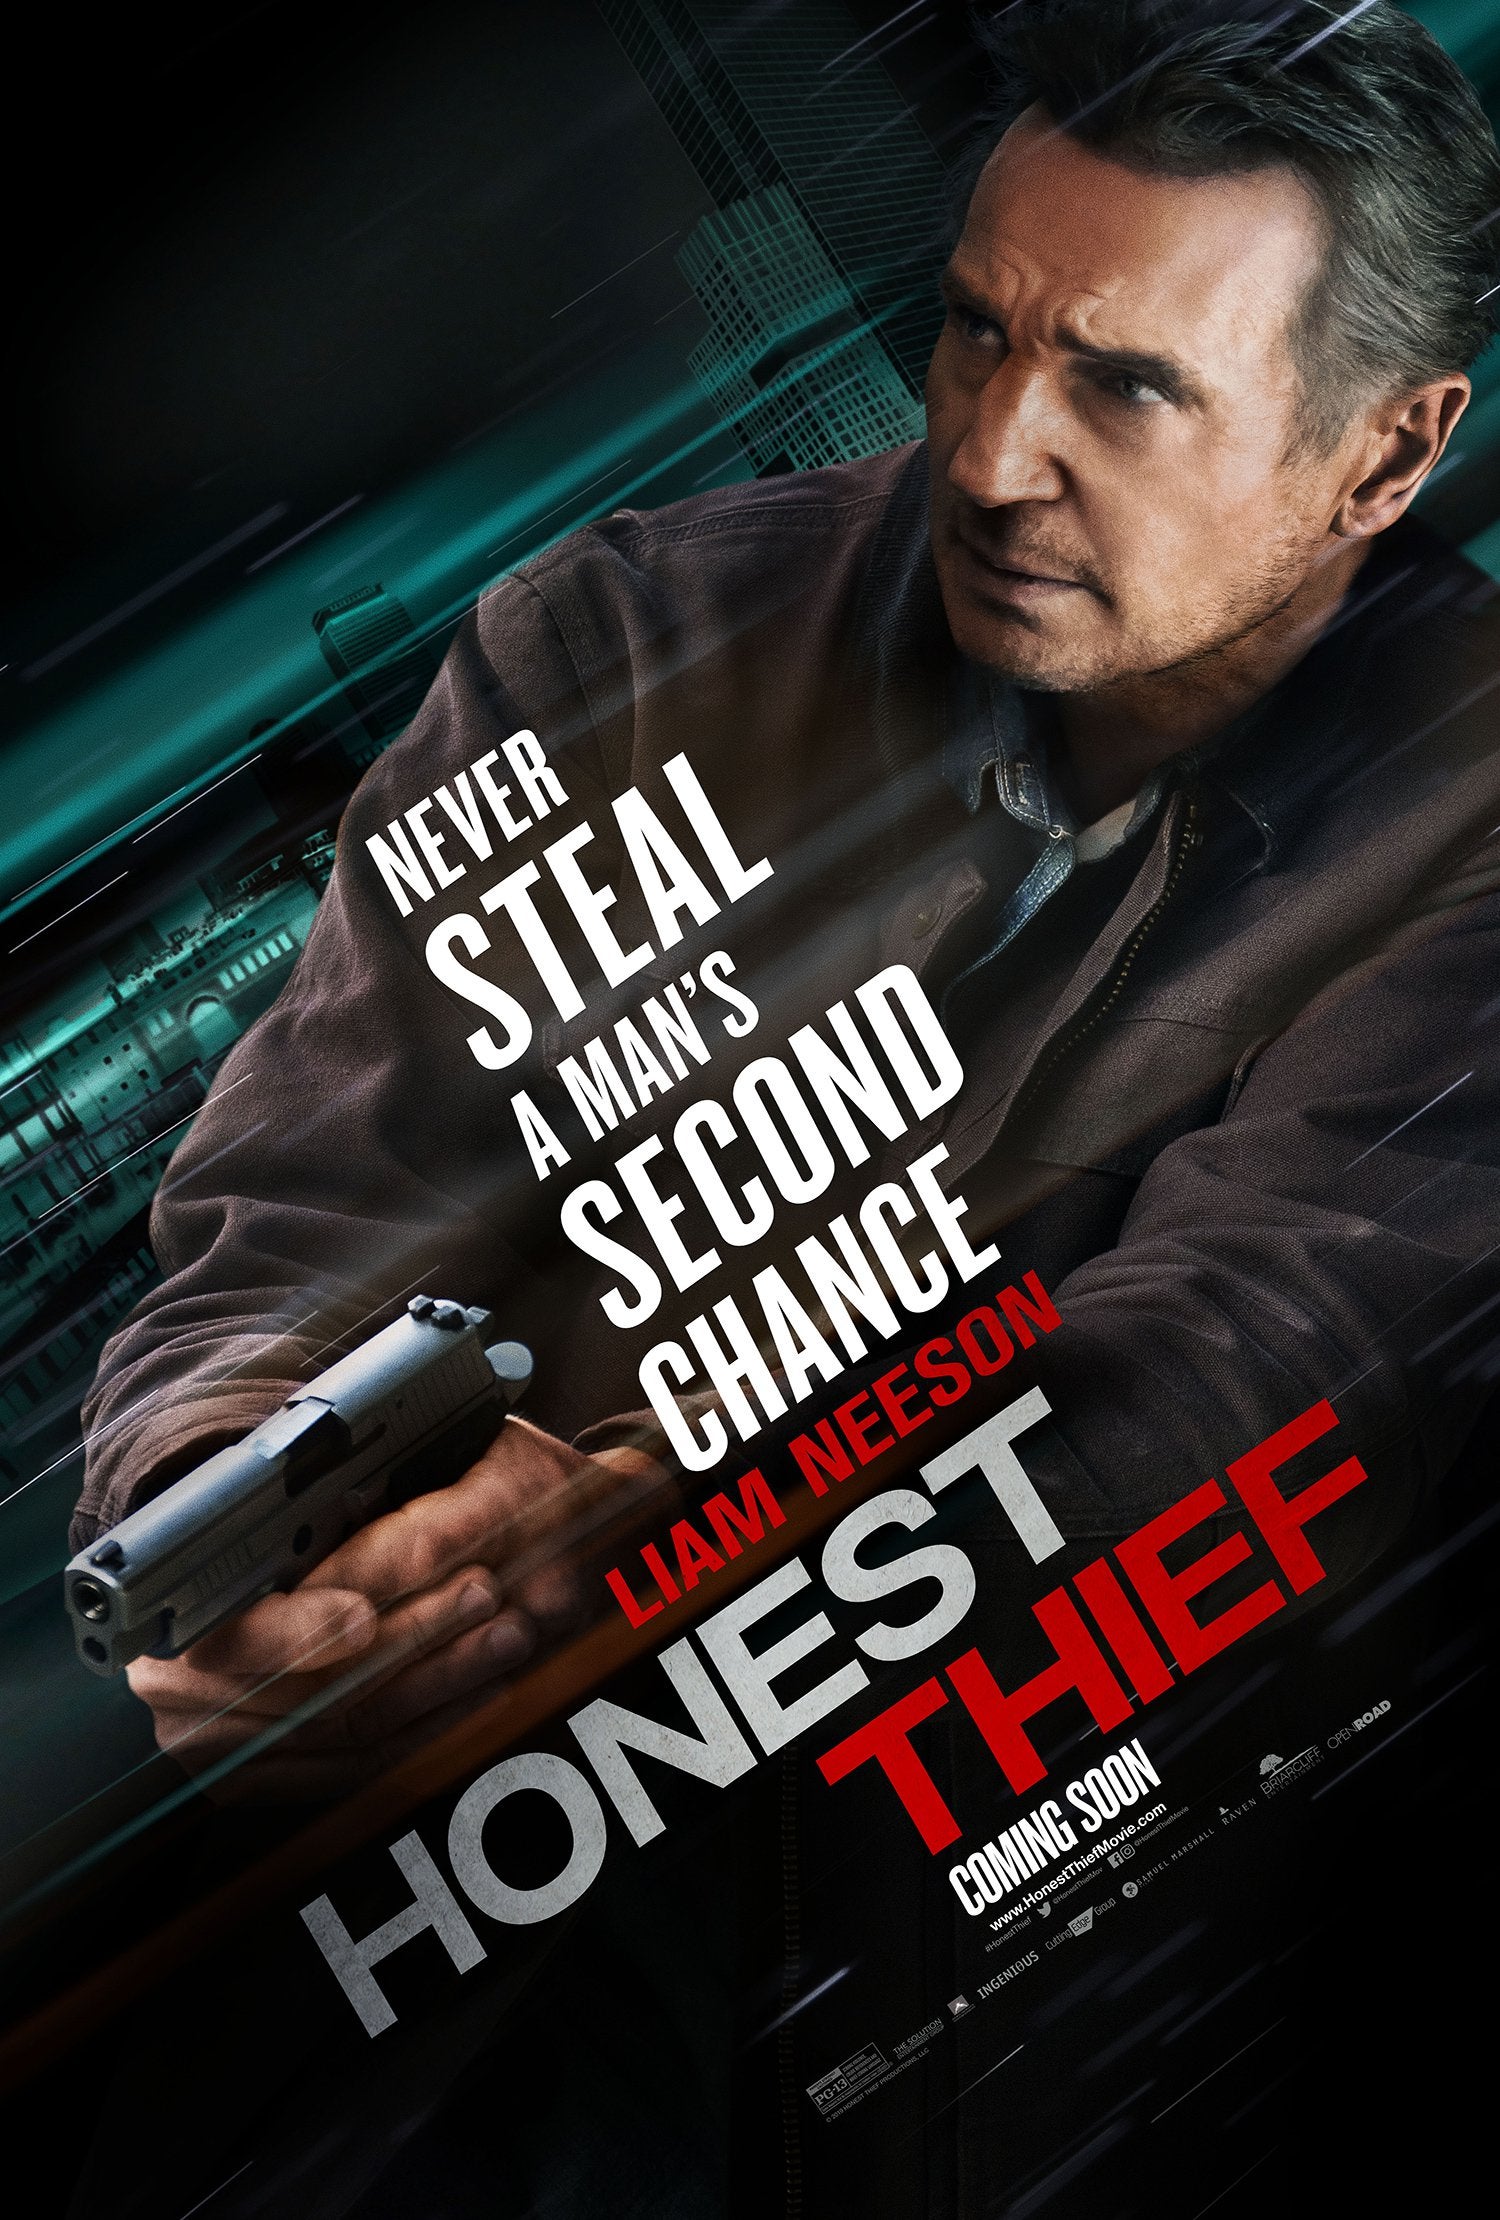 Honest Thief ทรชนปล้นชั่ว (2020)